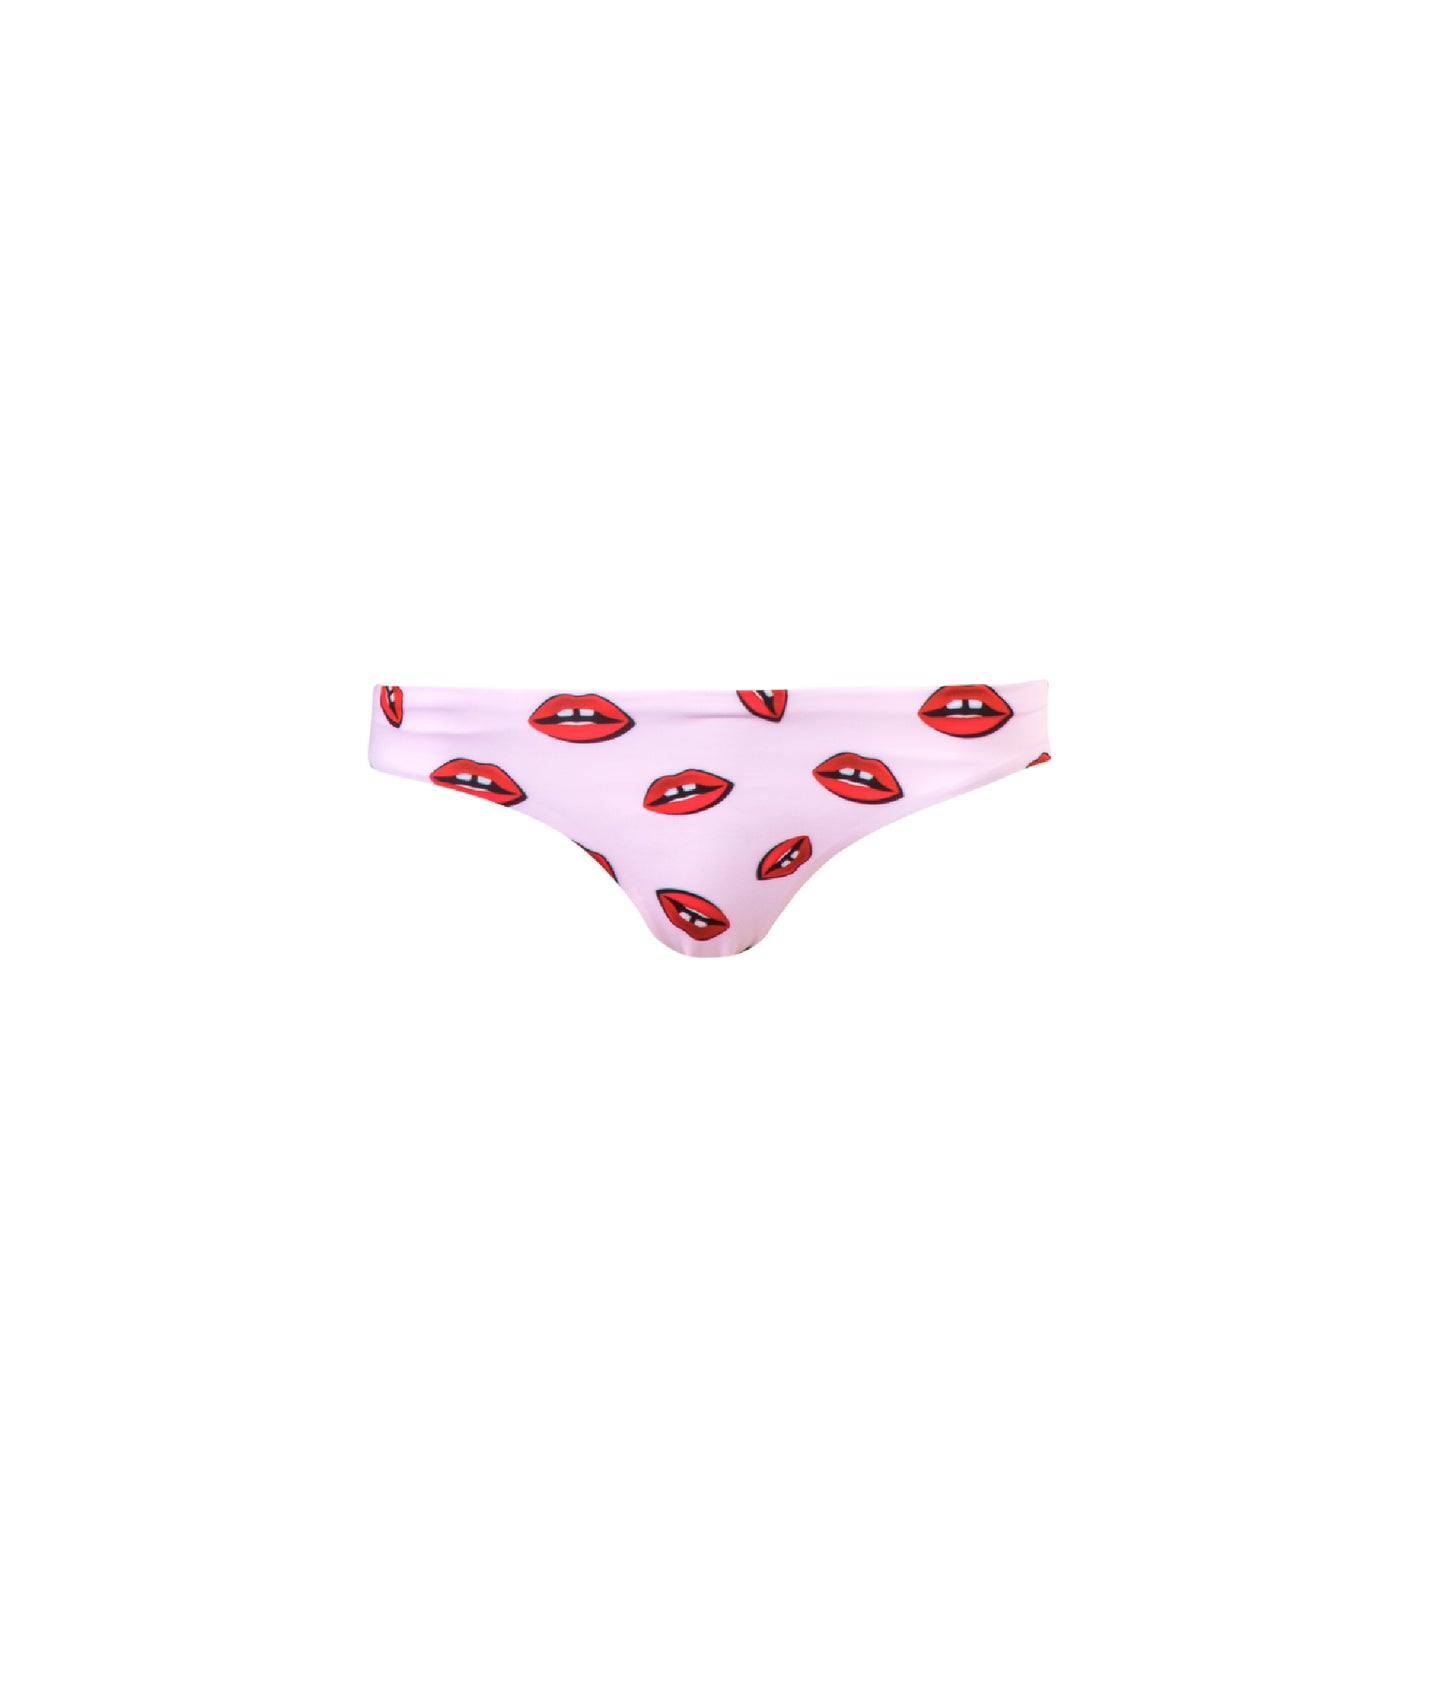 Verdelimon - Bikini Bottom - Tunas - Printed - Pink Lips - Front